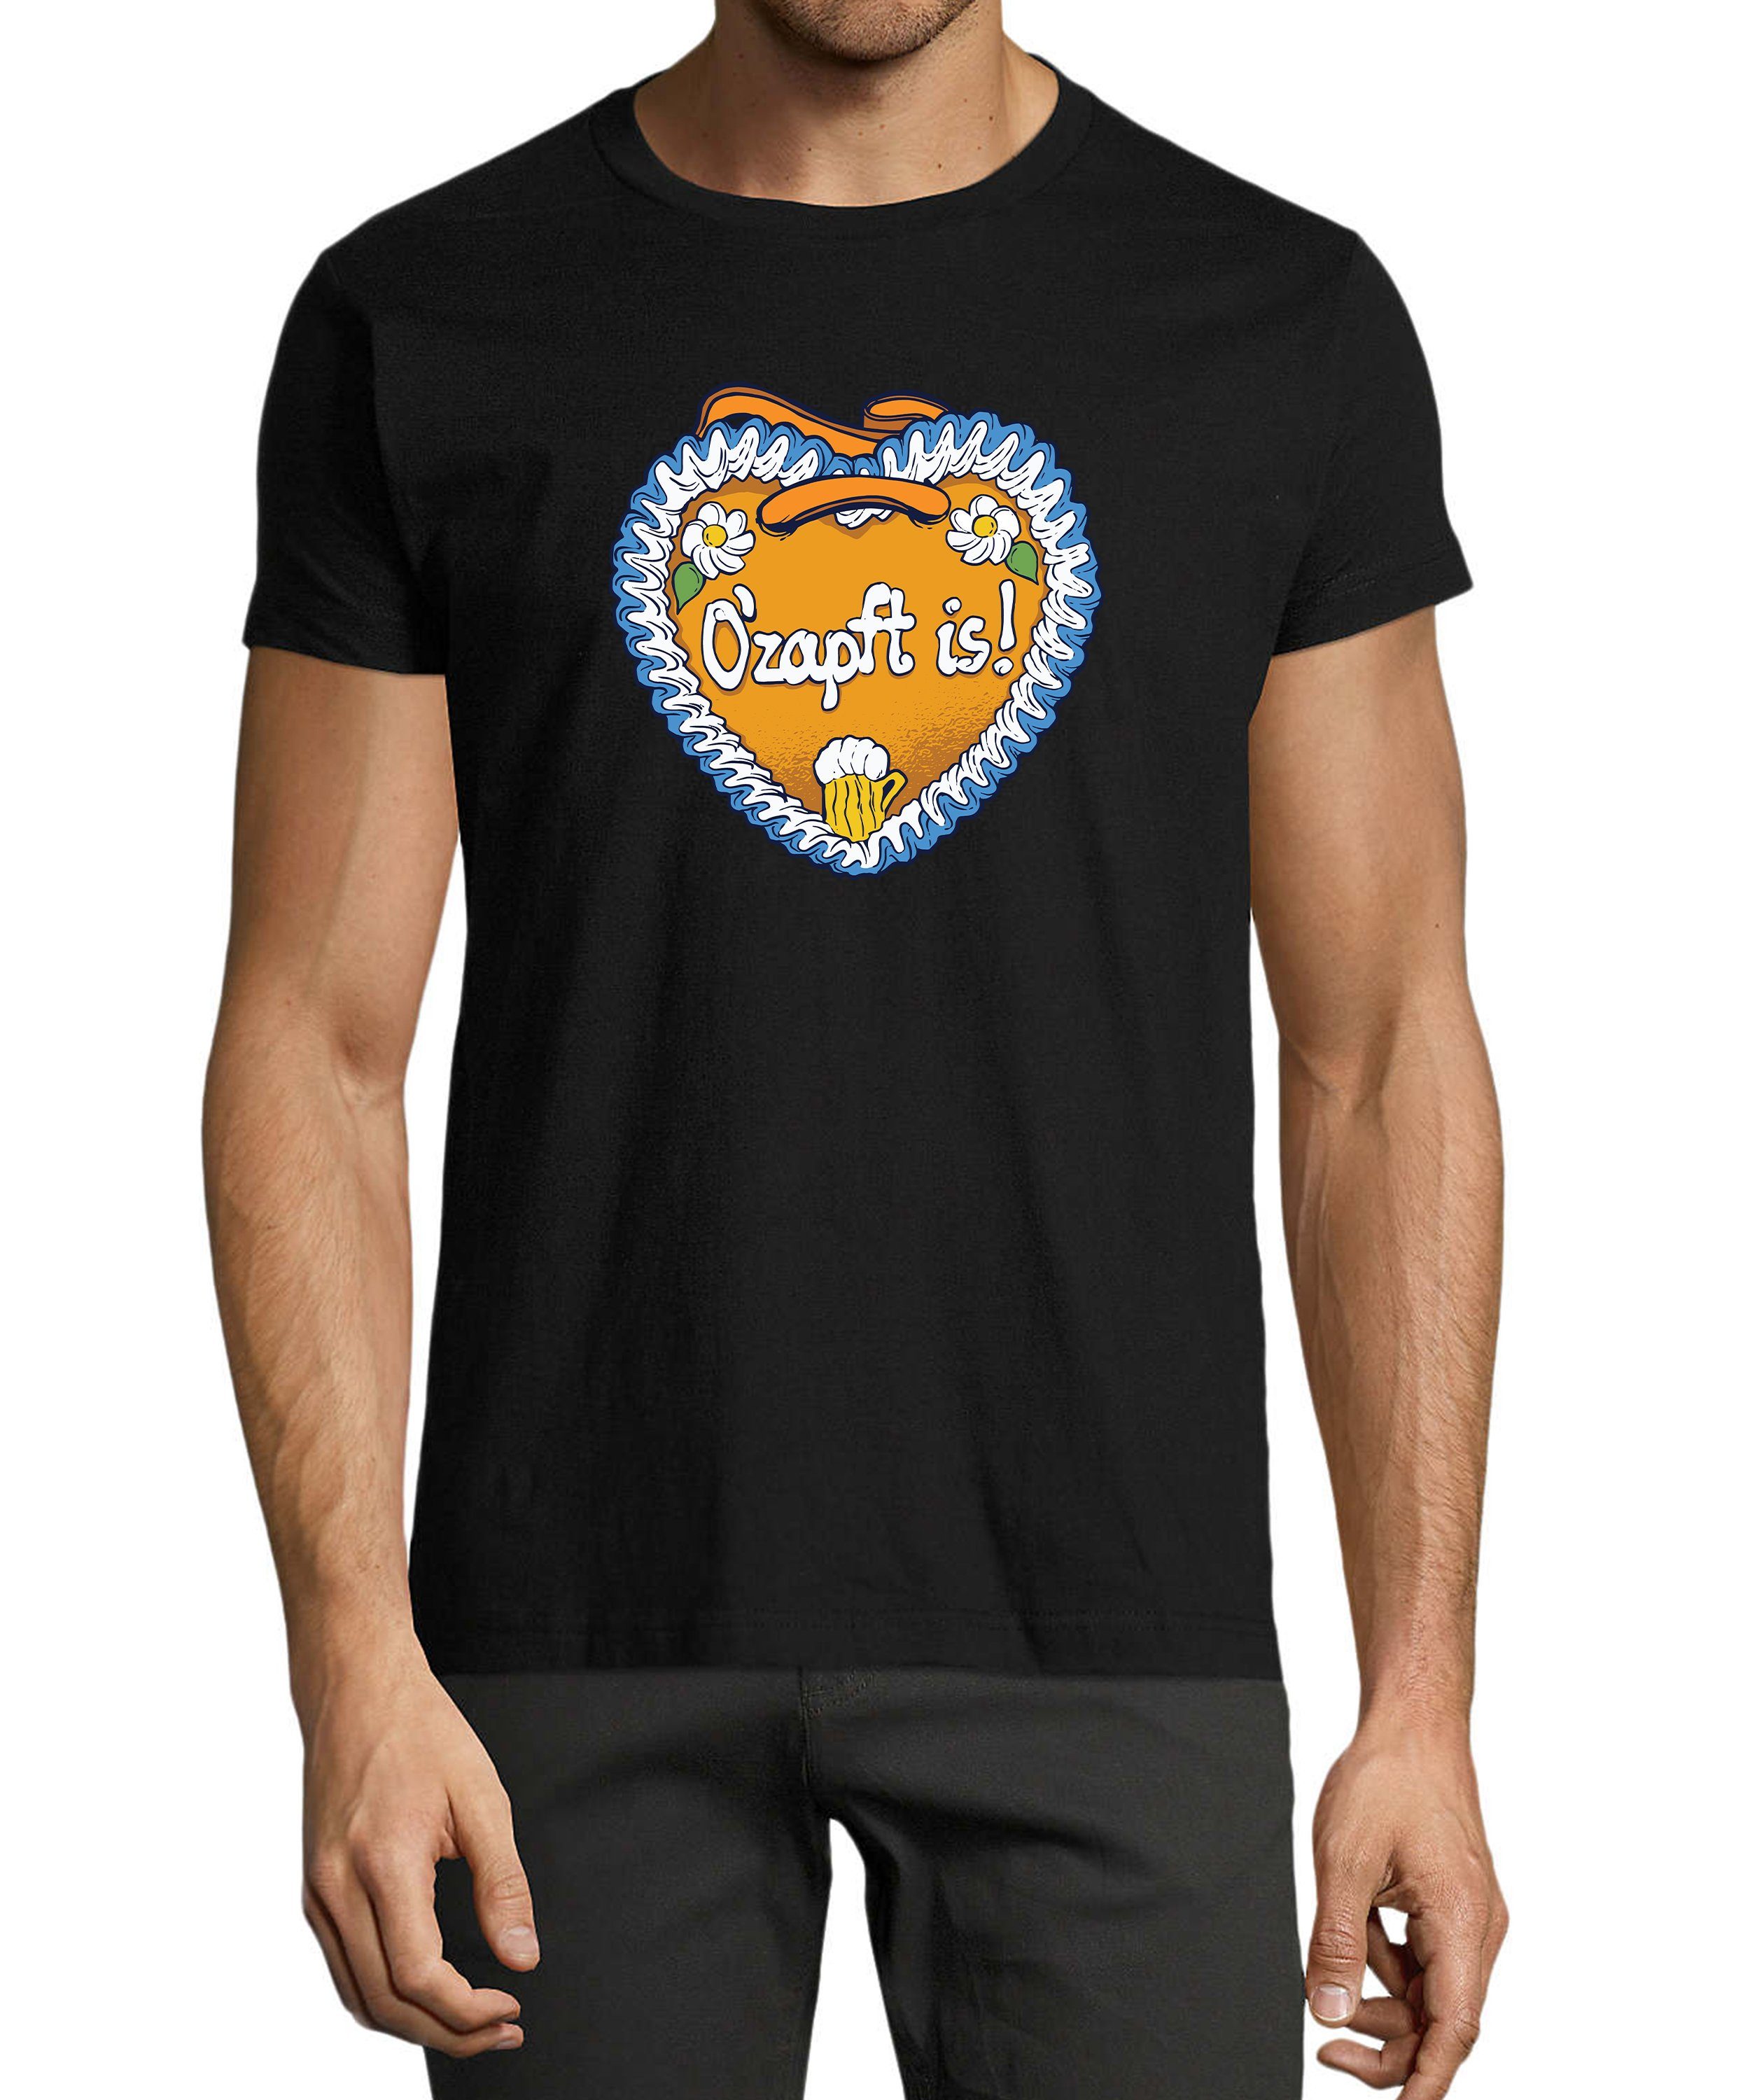 O'Zapft MyDesign24 Regular is Trinkshirt Print Aufdruck Shirt Baumwollshirt i313 Fun T-Shirt Fit, Herren mit - schwarz